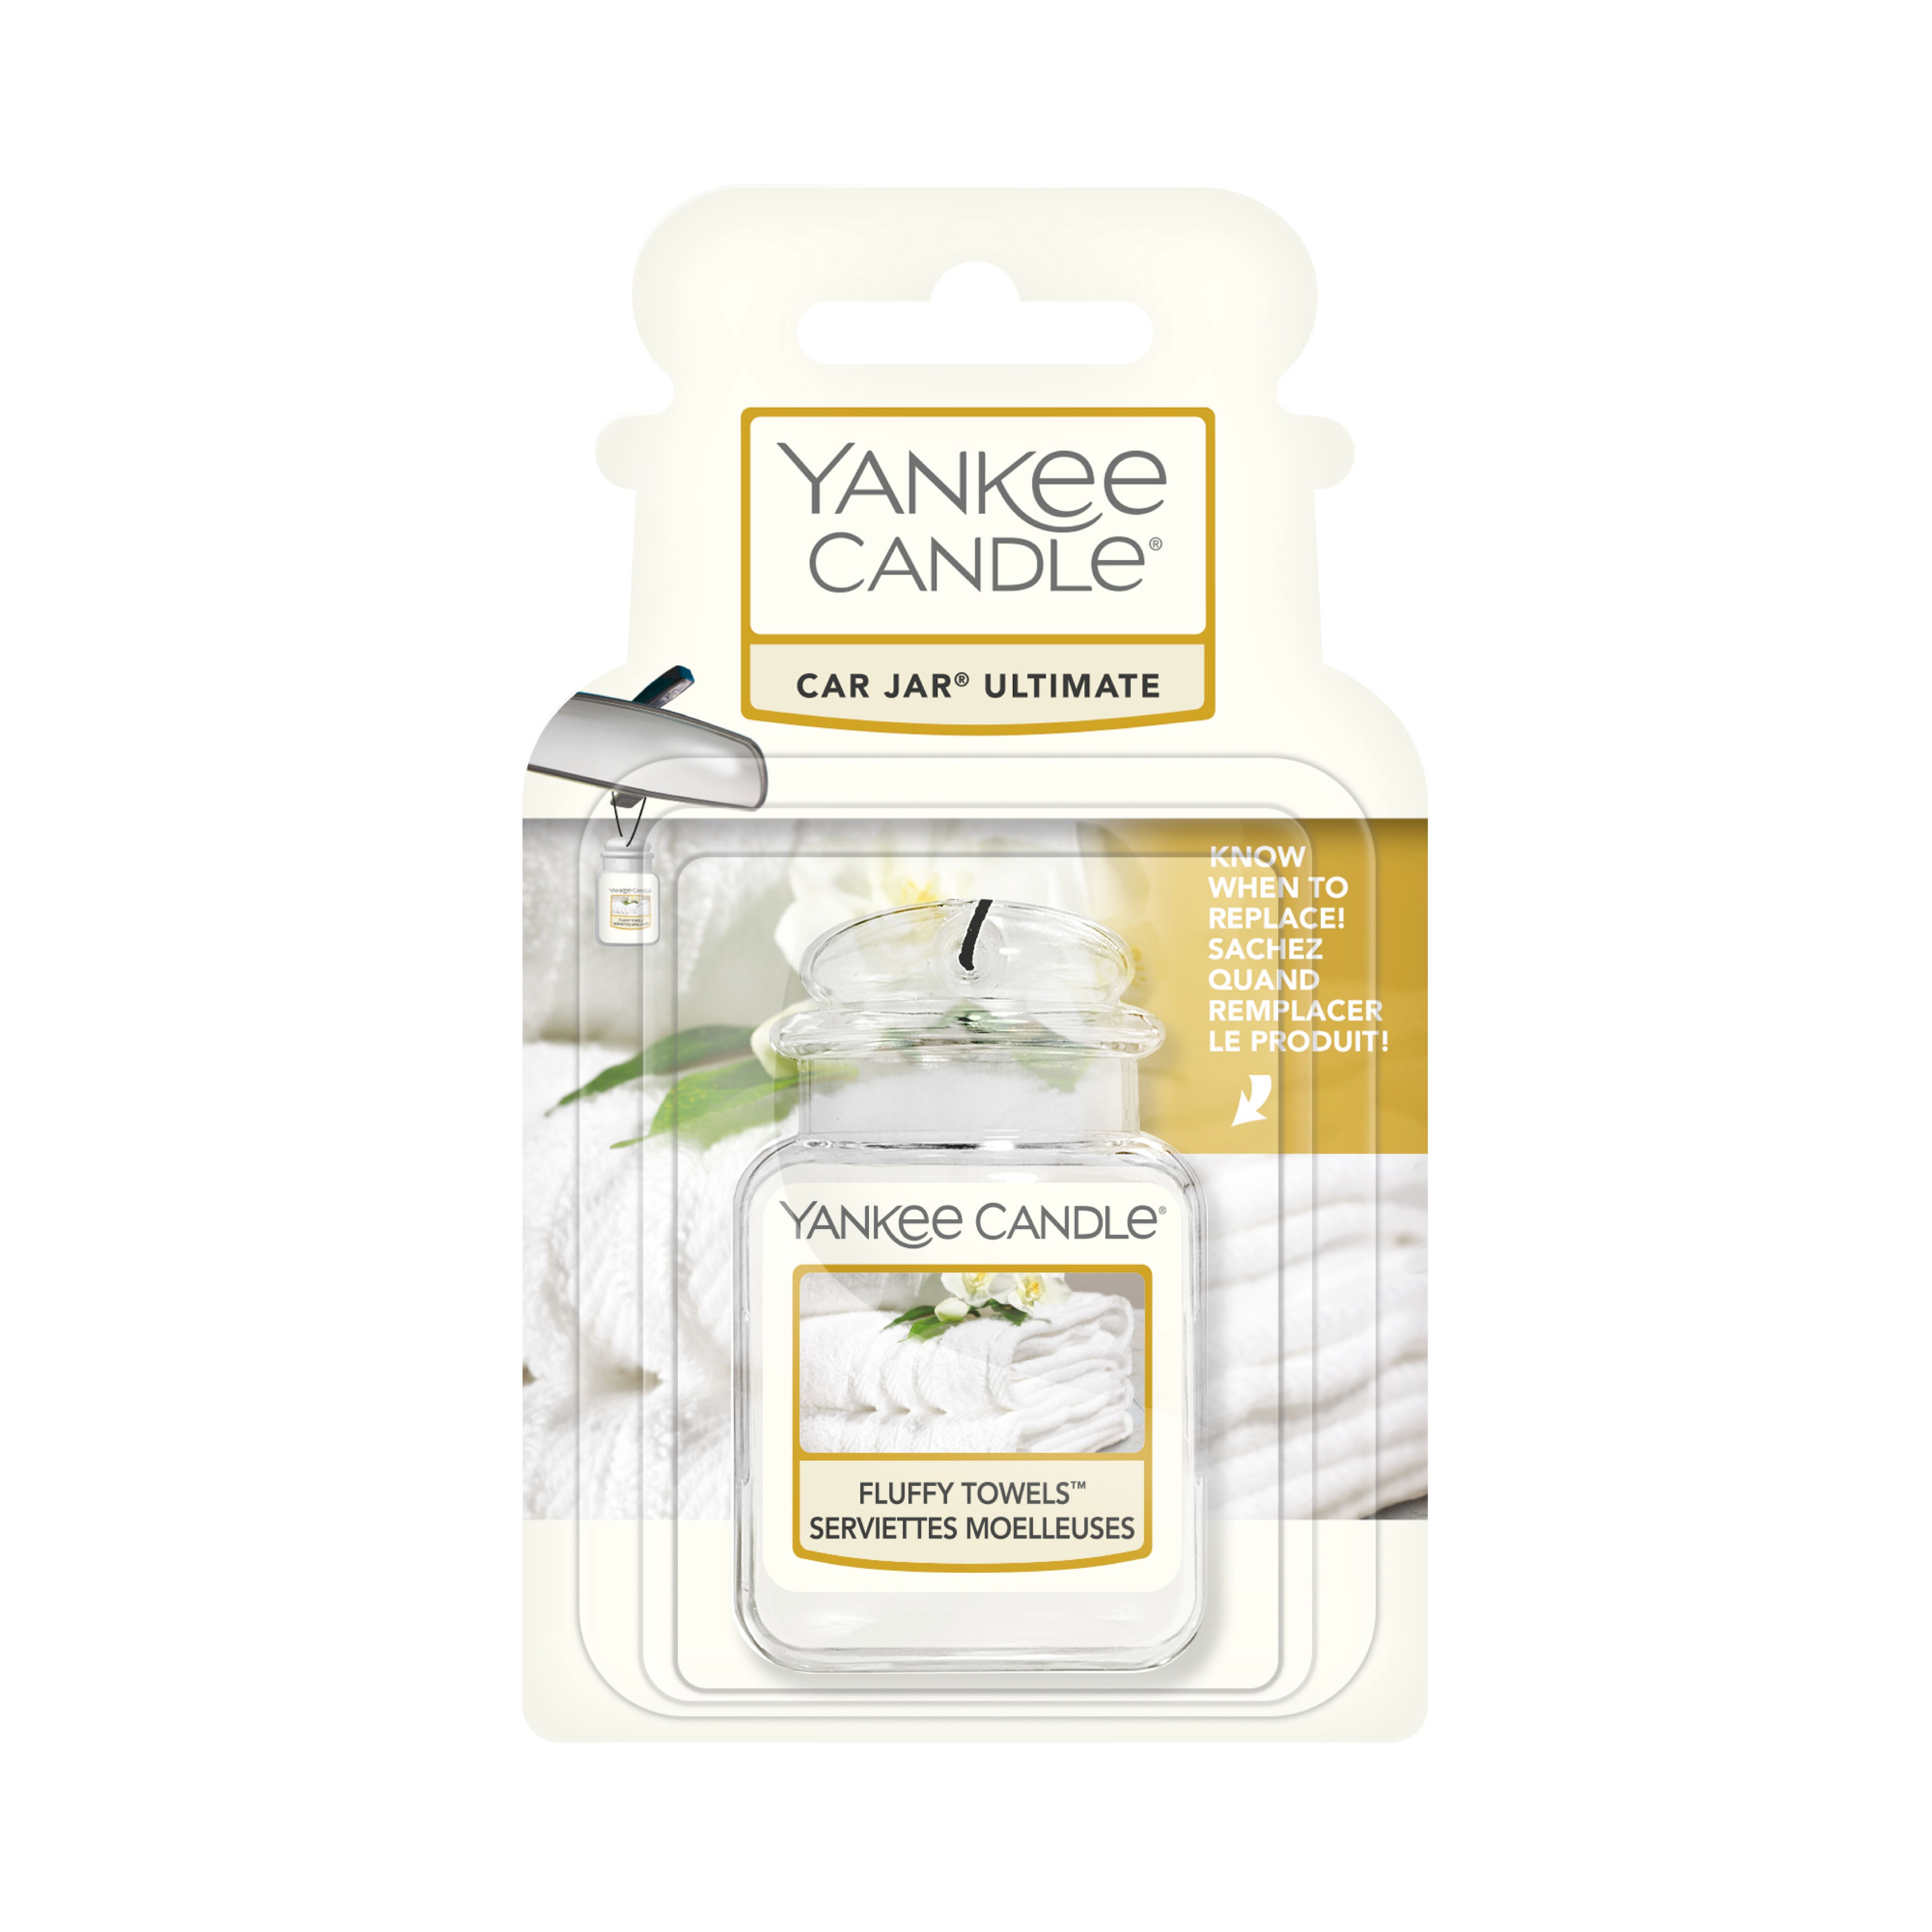 Yankee Candle Car Jar Ultimate Air Freshener, Soft Blanket